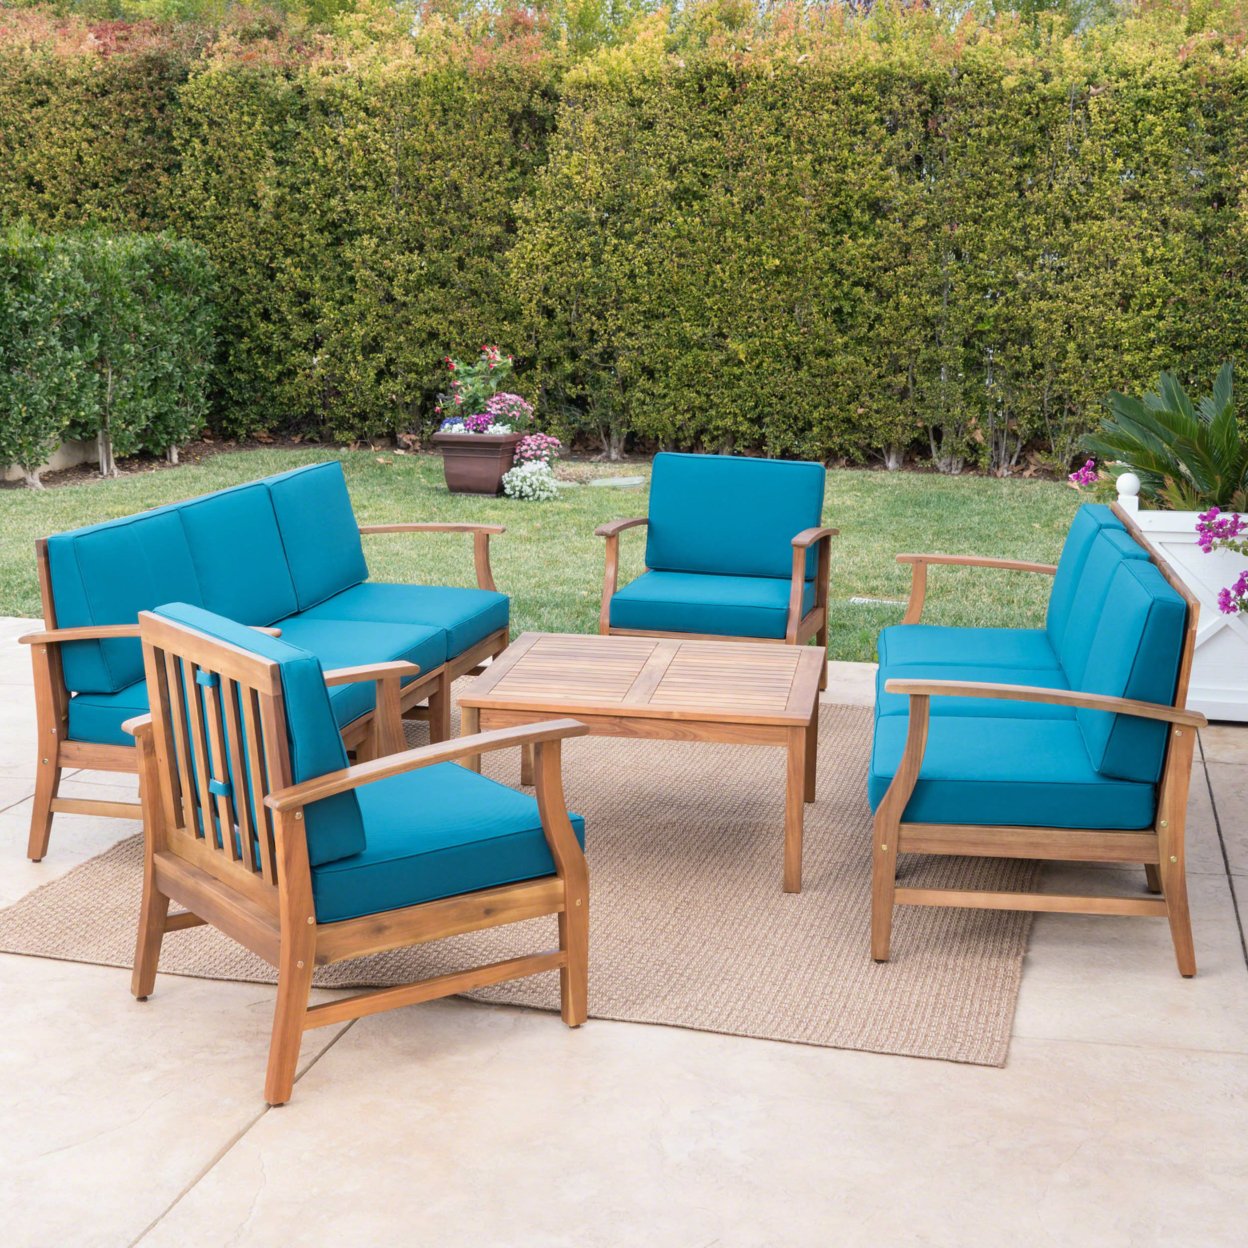 Scarlett Outdoor 8 Seat Teak Finished Acacia Wood Sofa And Table Set - Blue